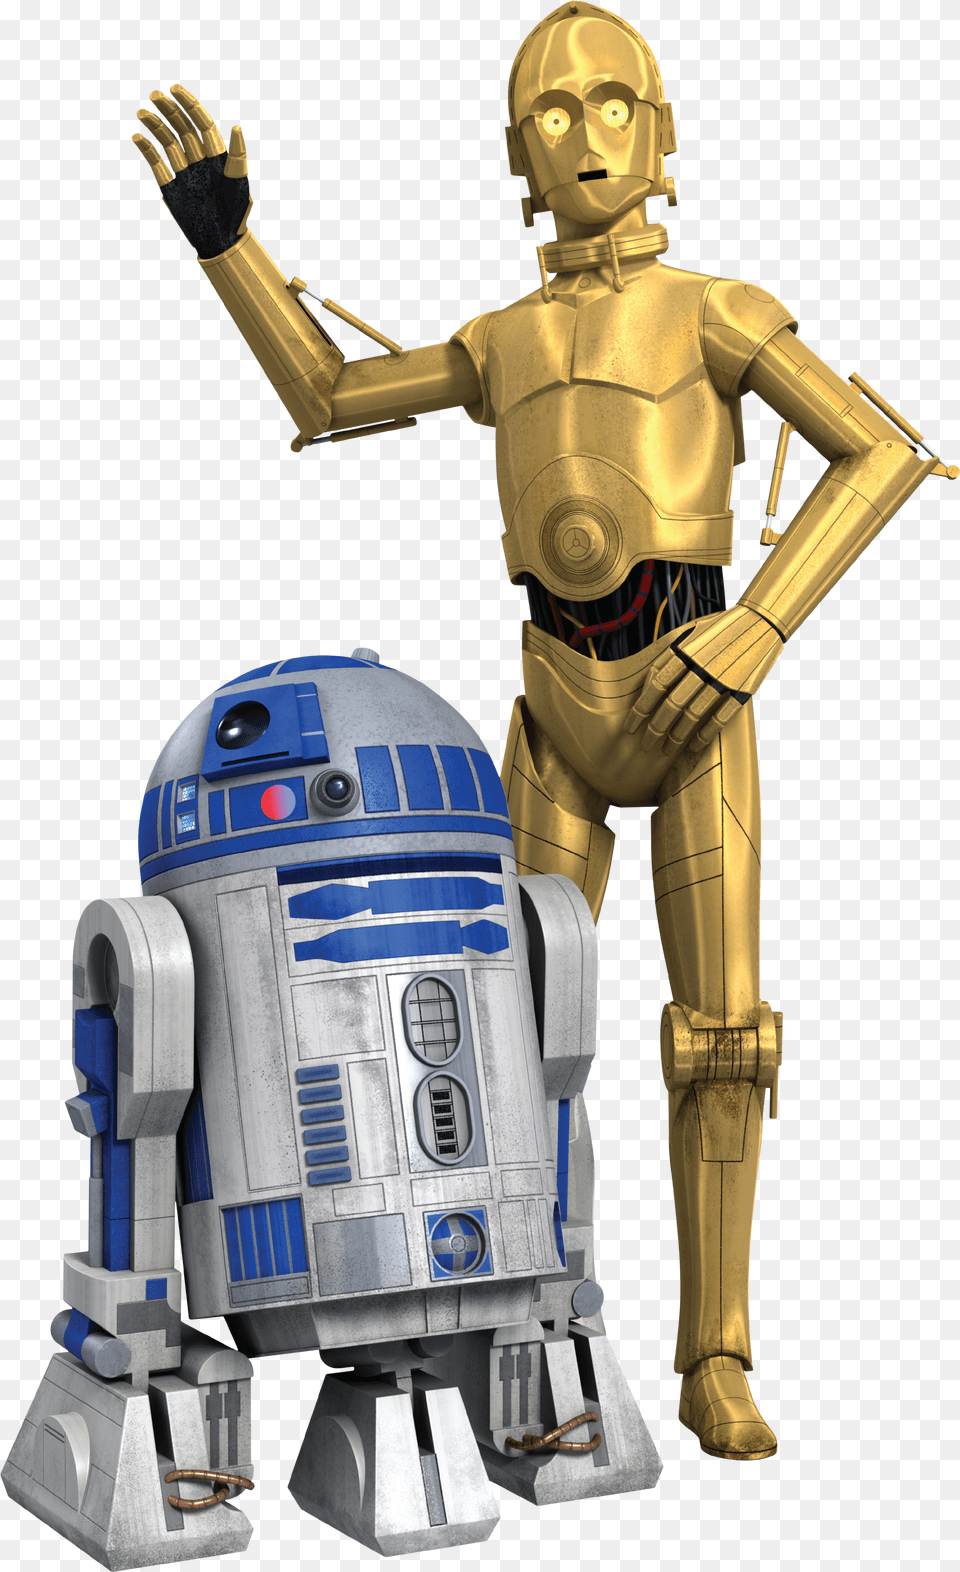 Download Rebels R2 D2 And C 3po Star Wars Rebels R2d2 Star Wars Rebels C3po Png